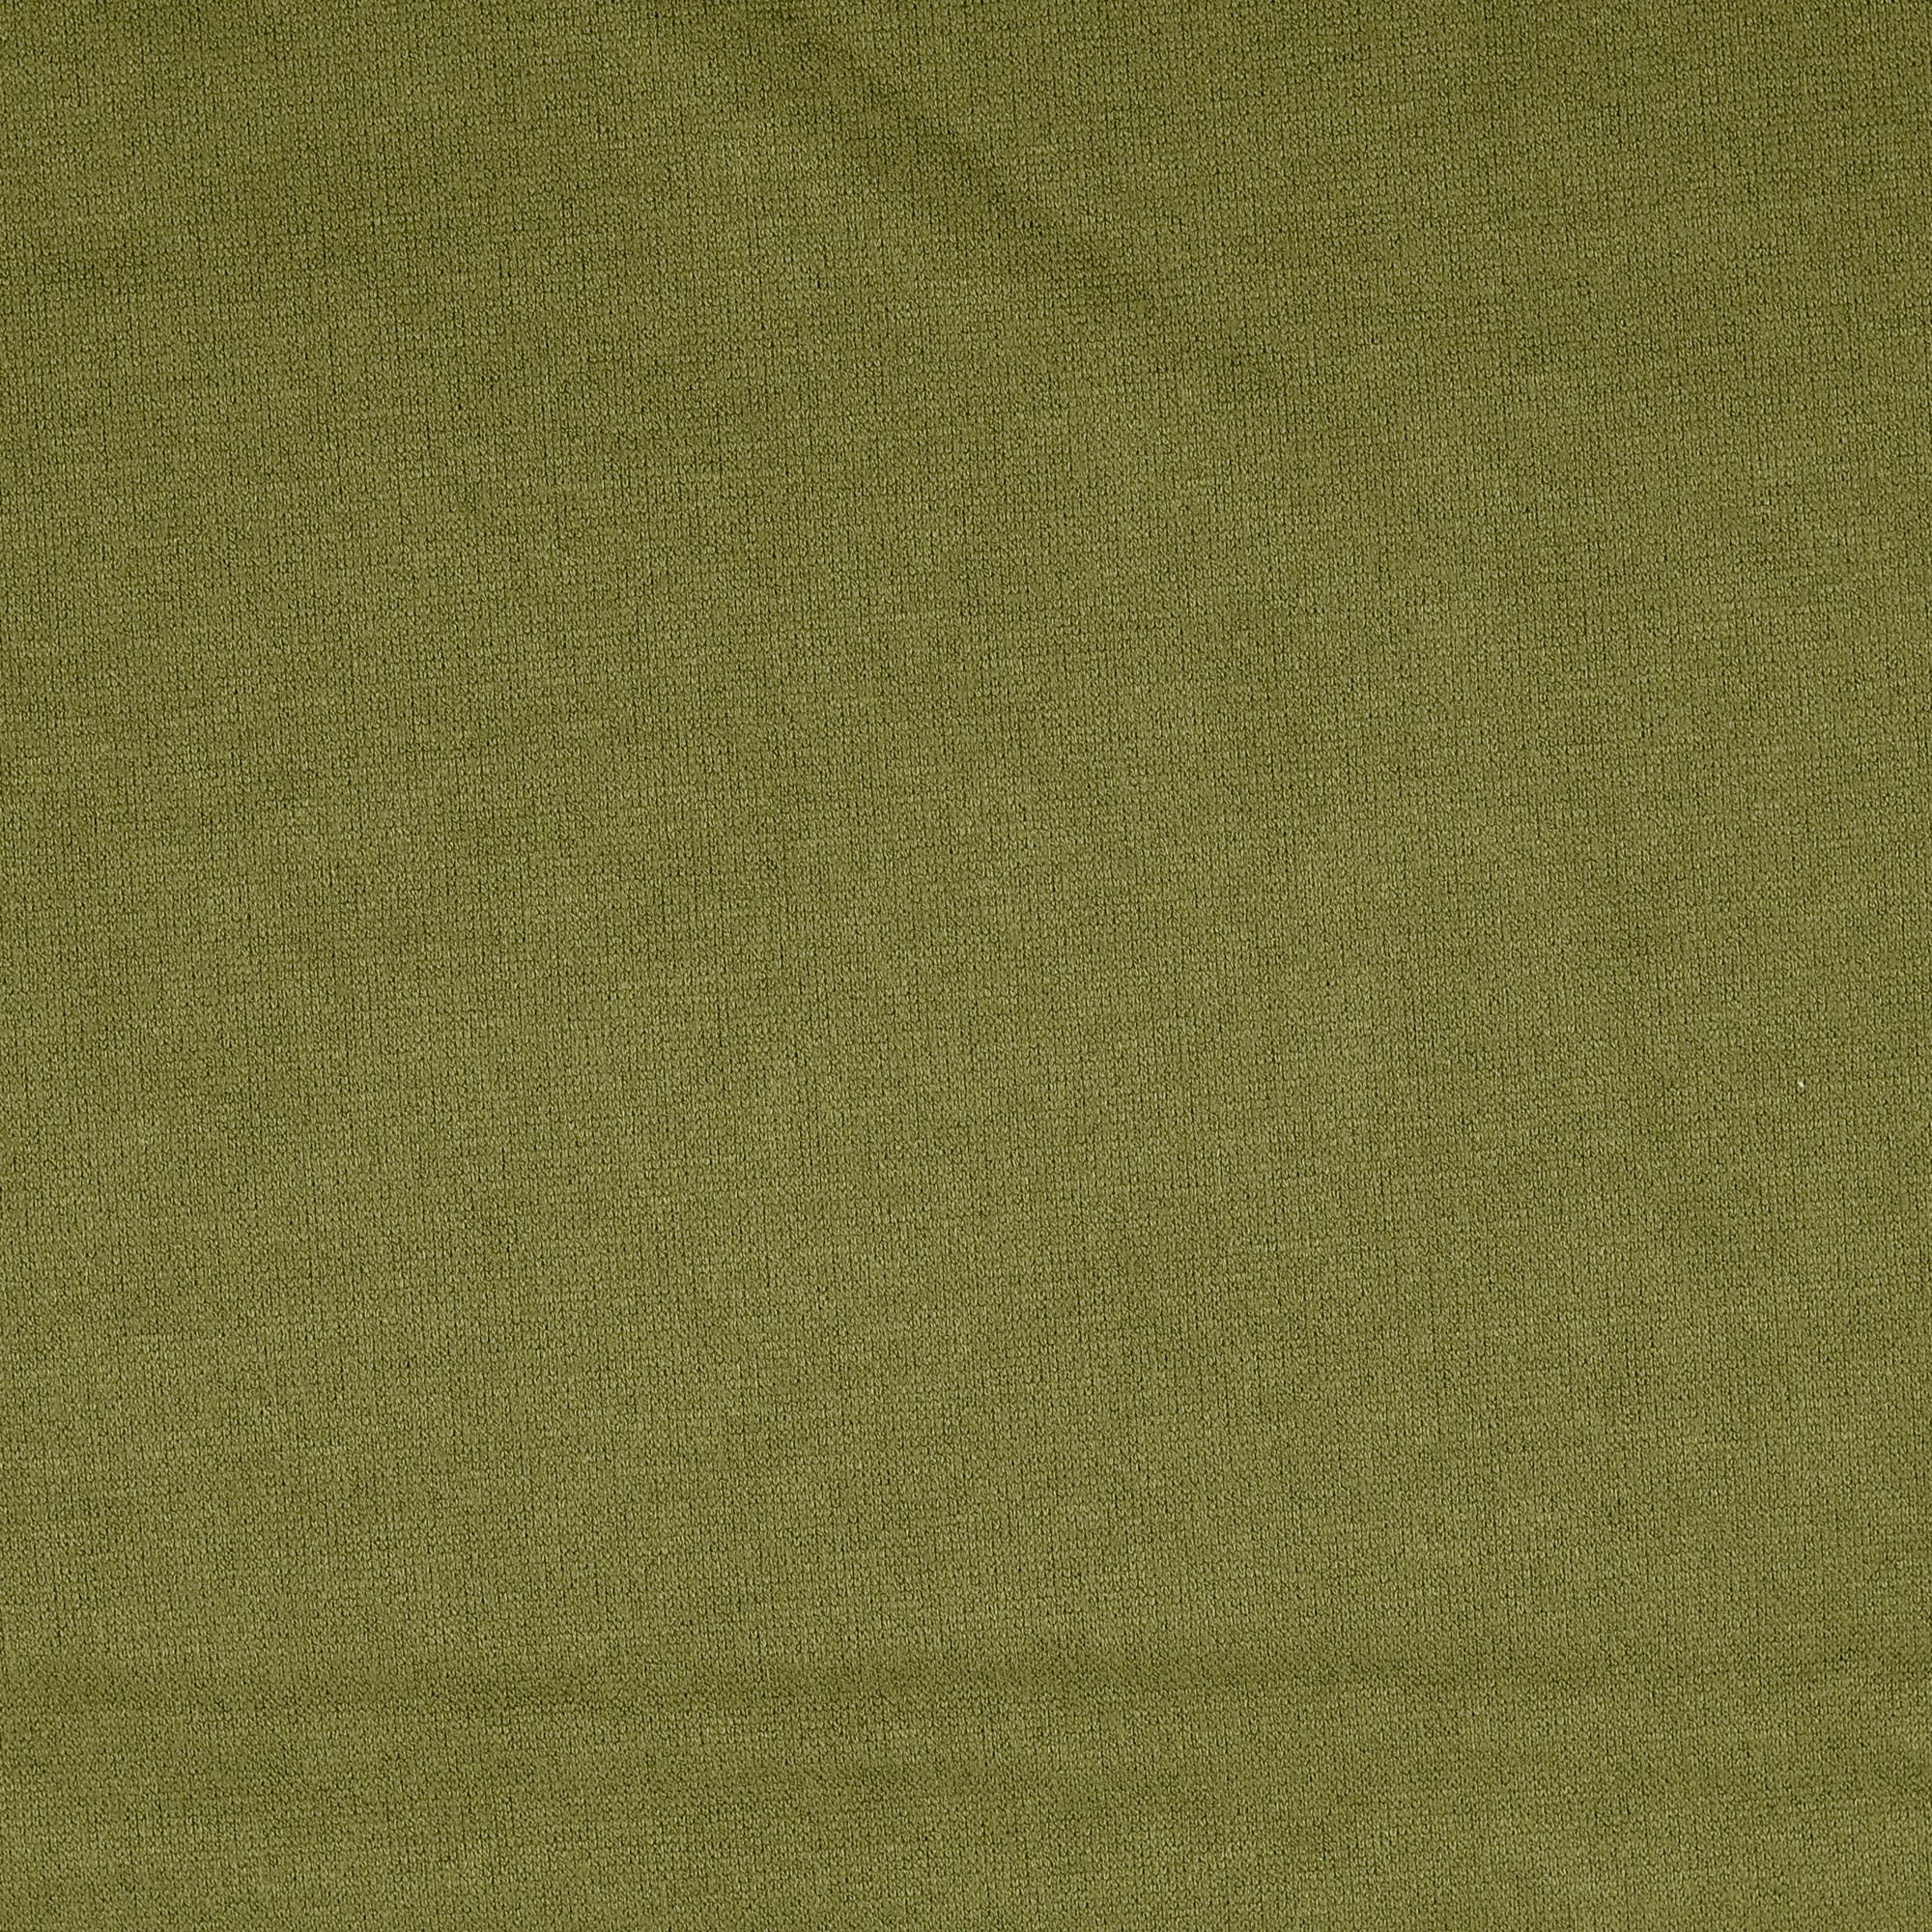 Snug Viscose Blend Sweater Knit in Khaki Green